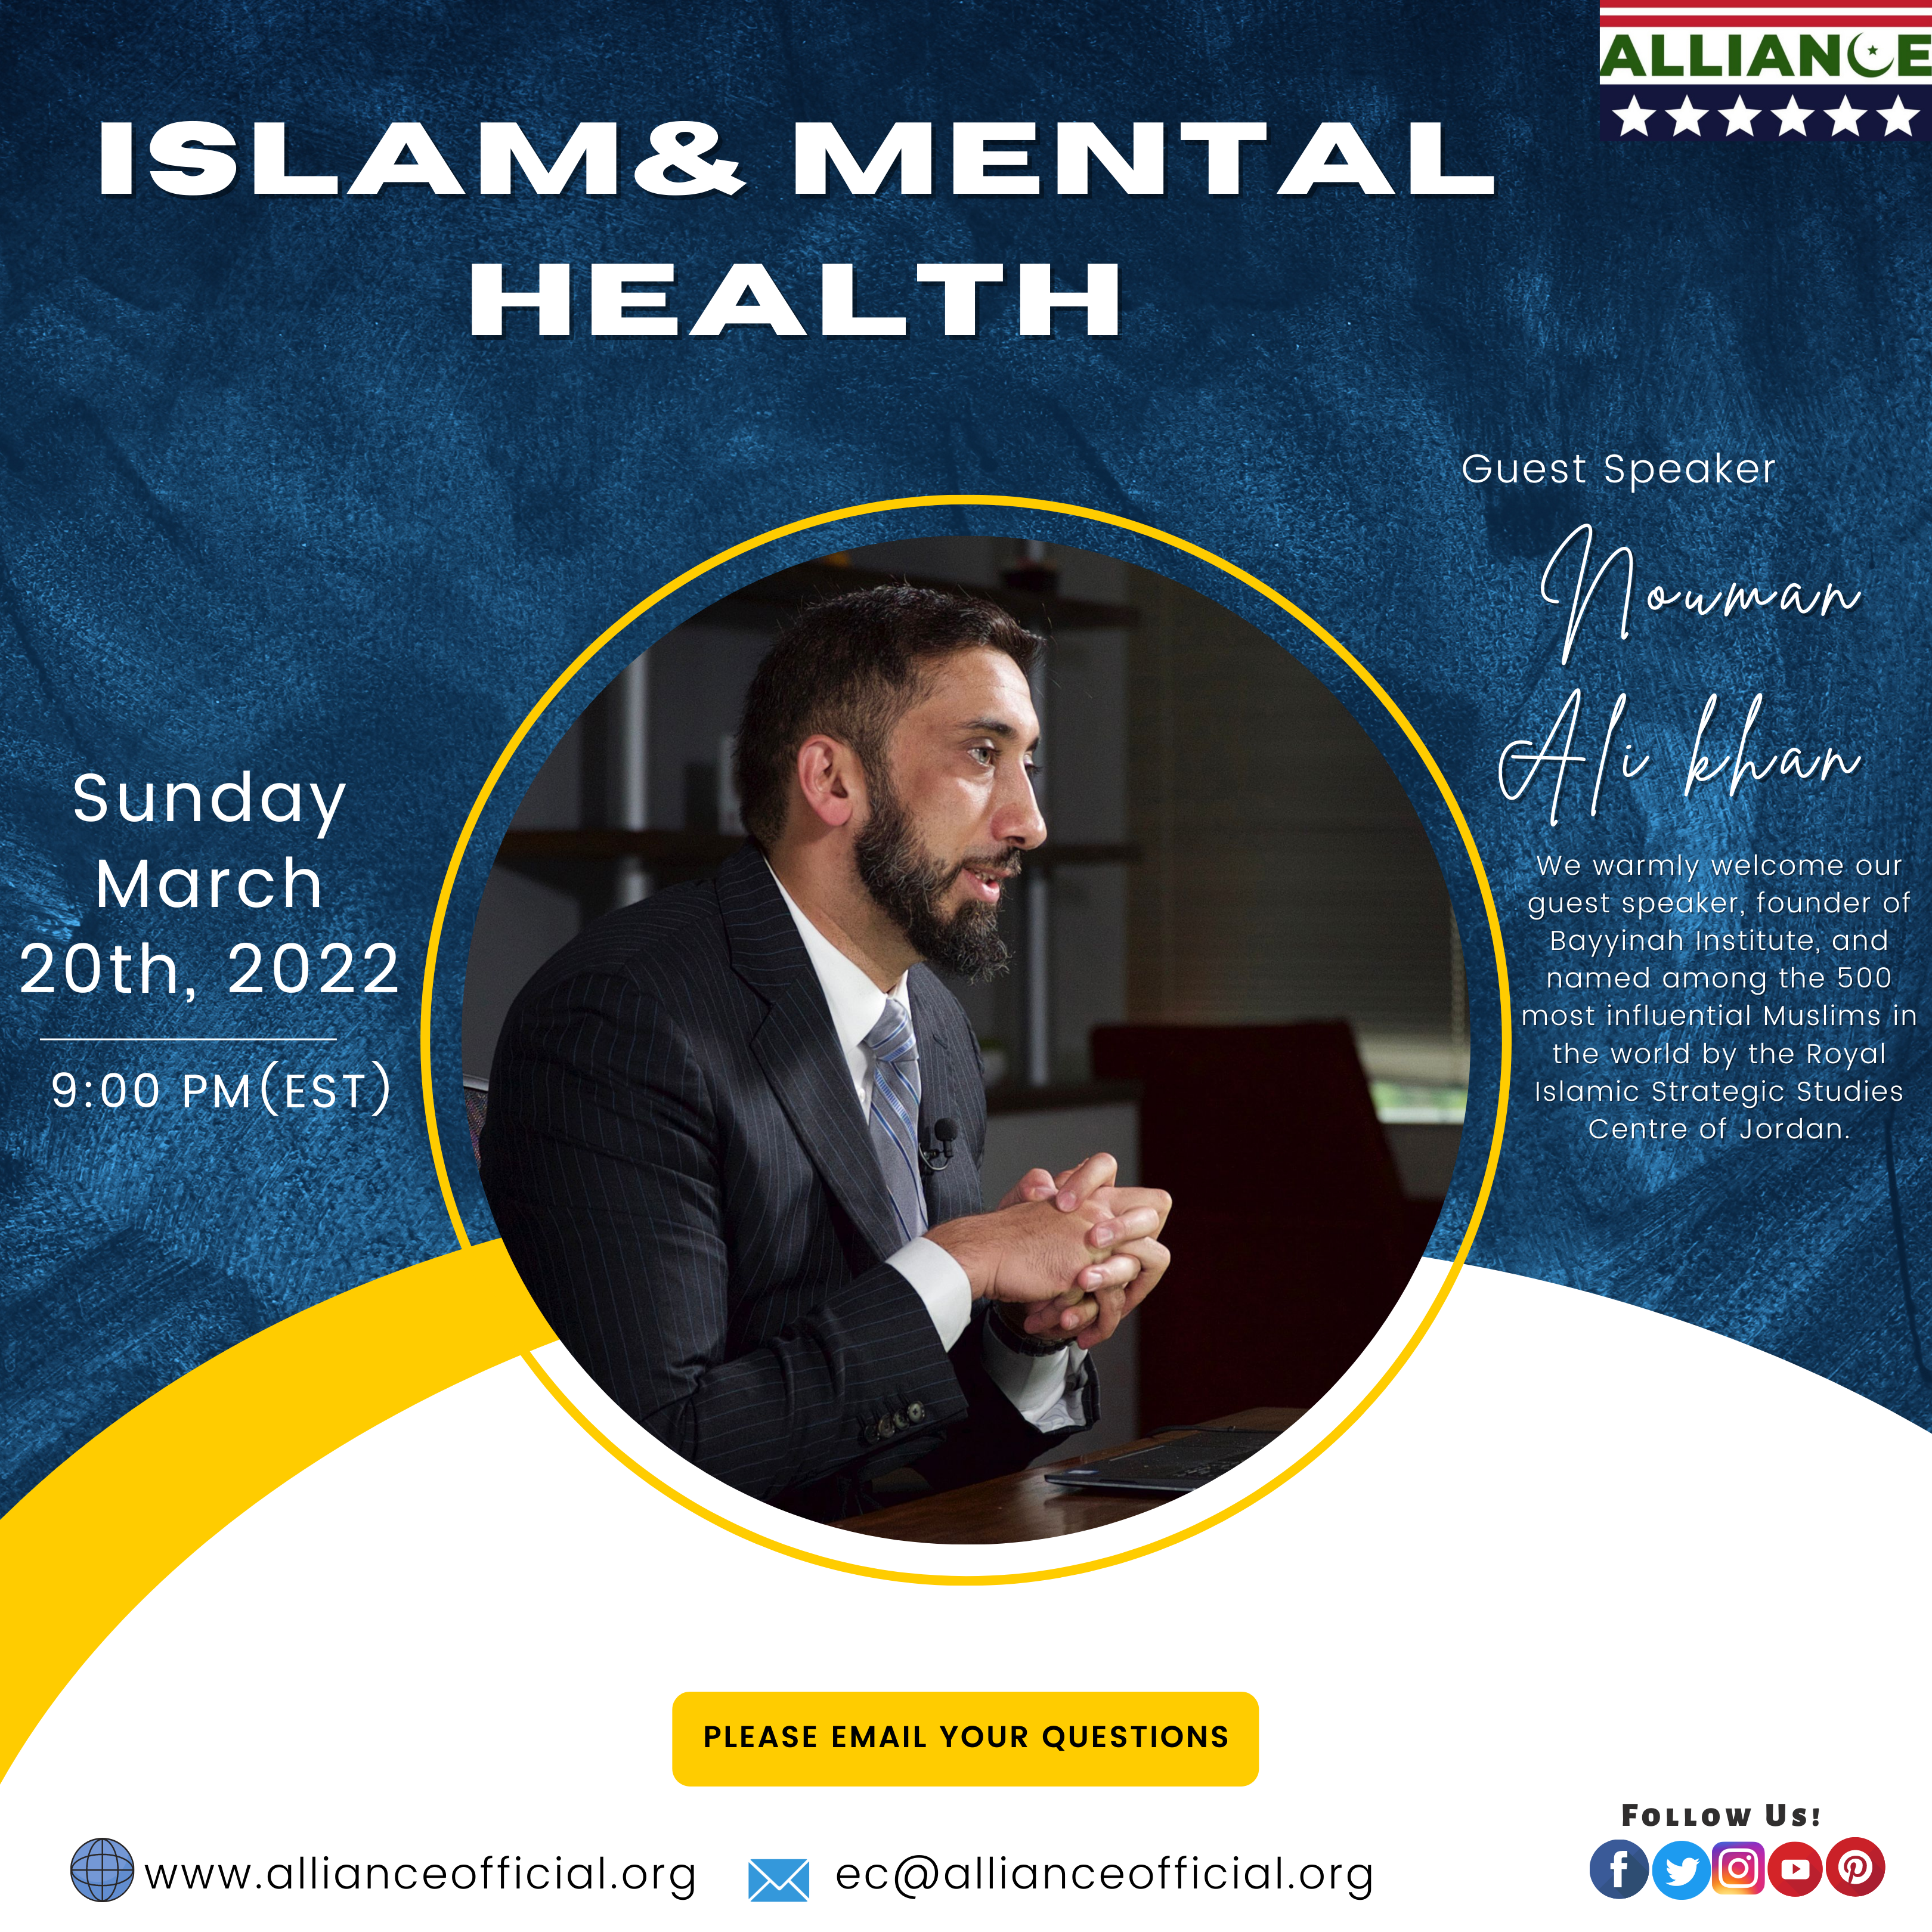 Islam and mental health